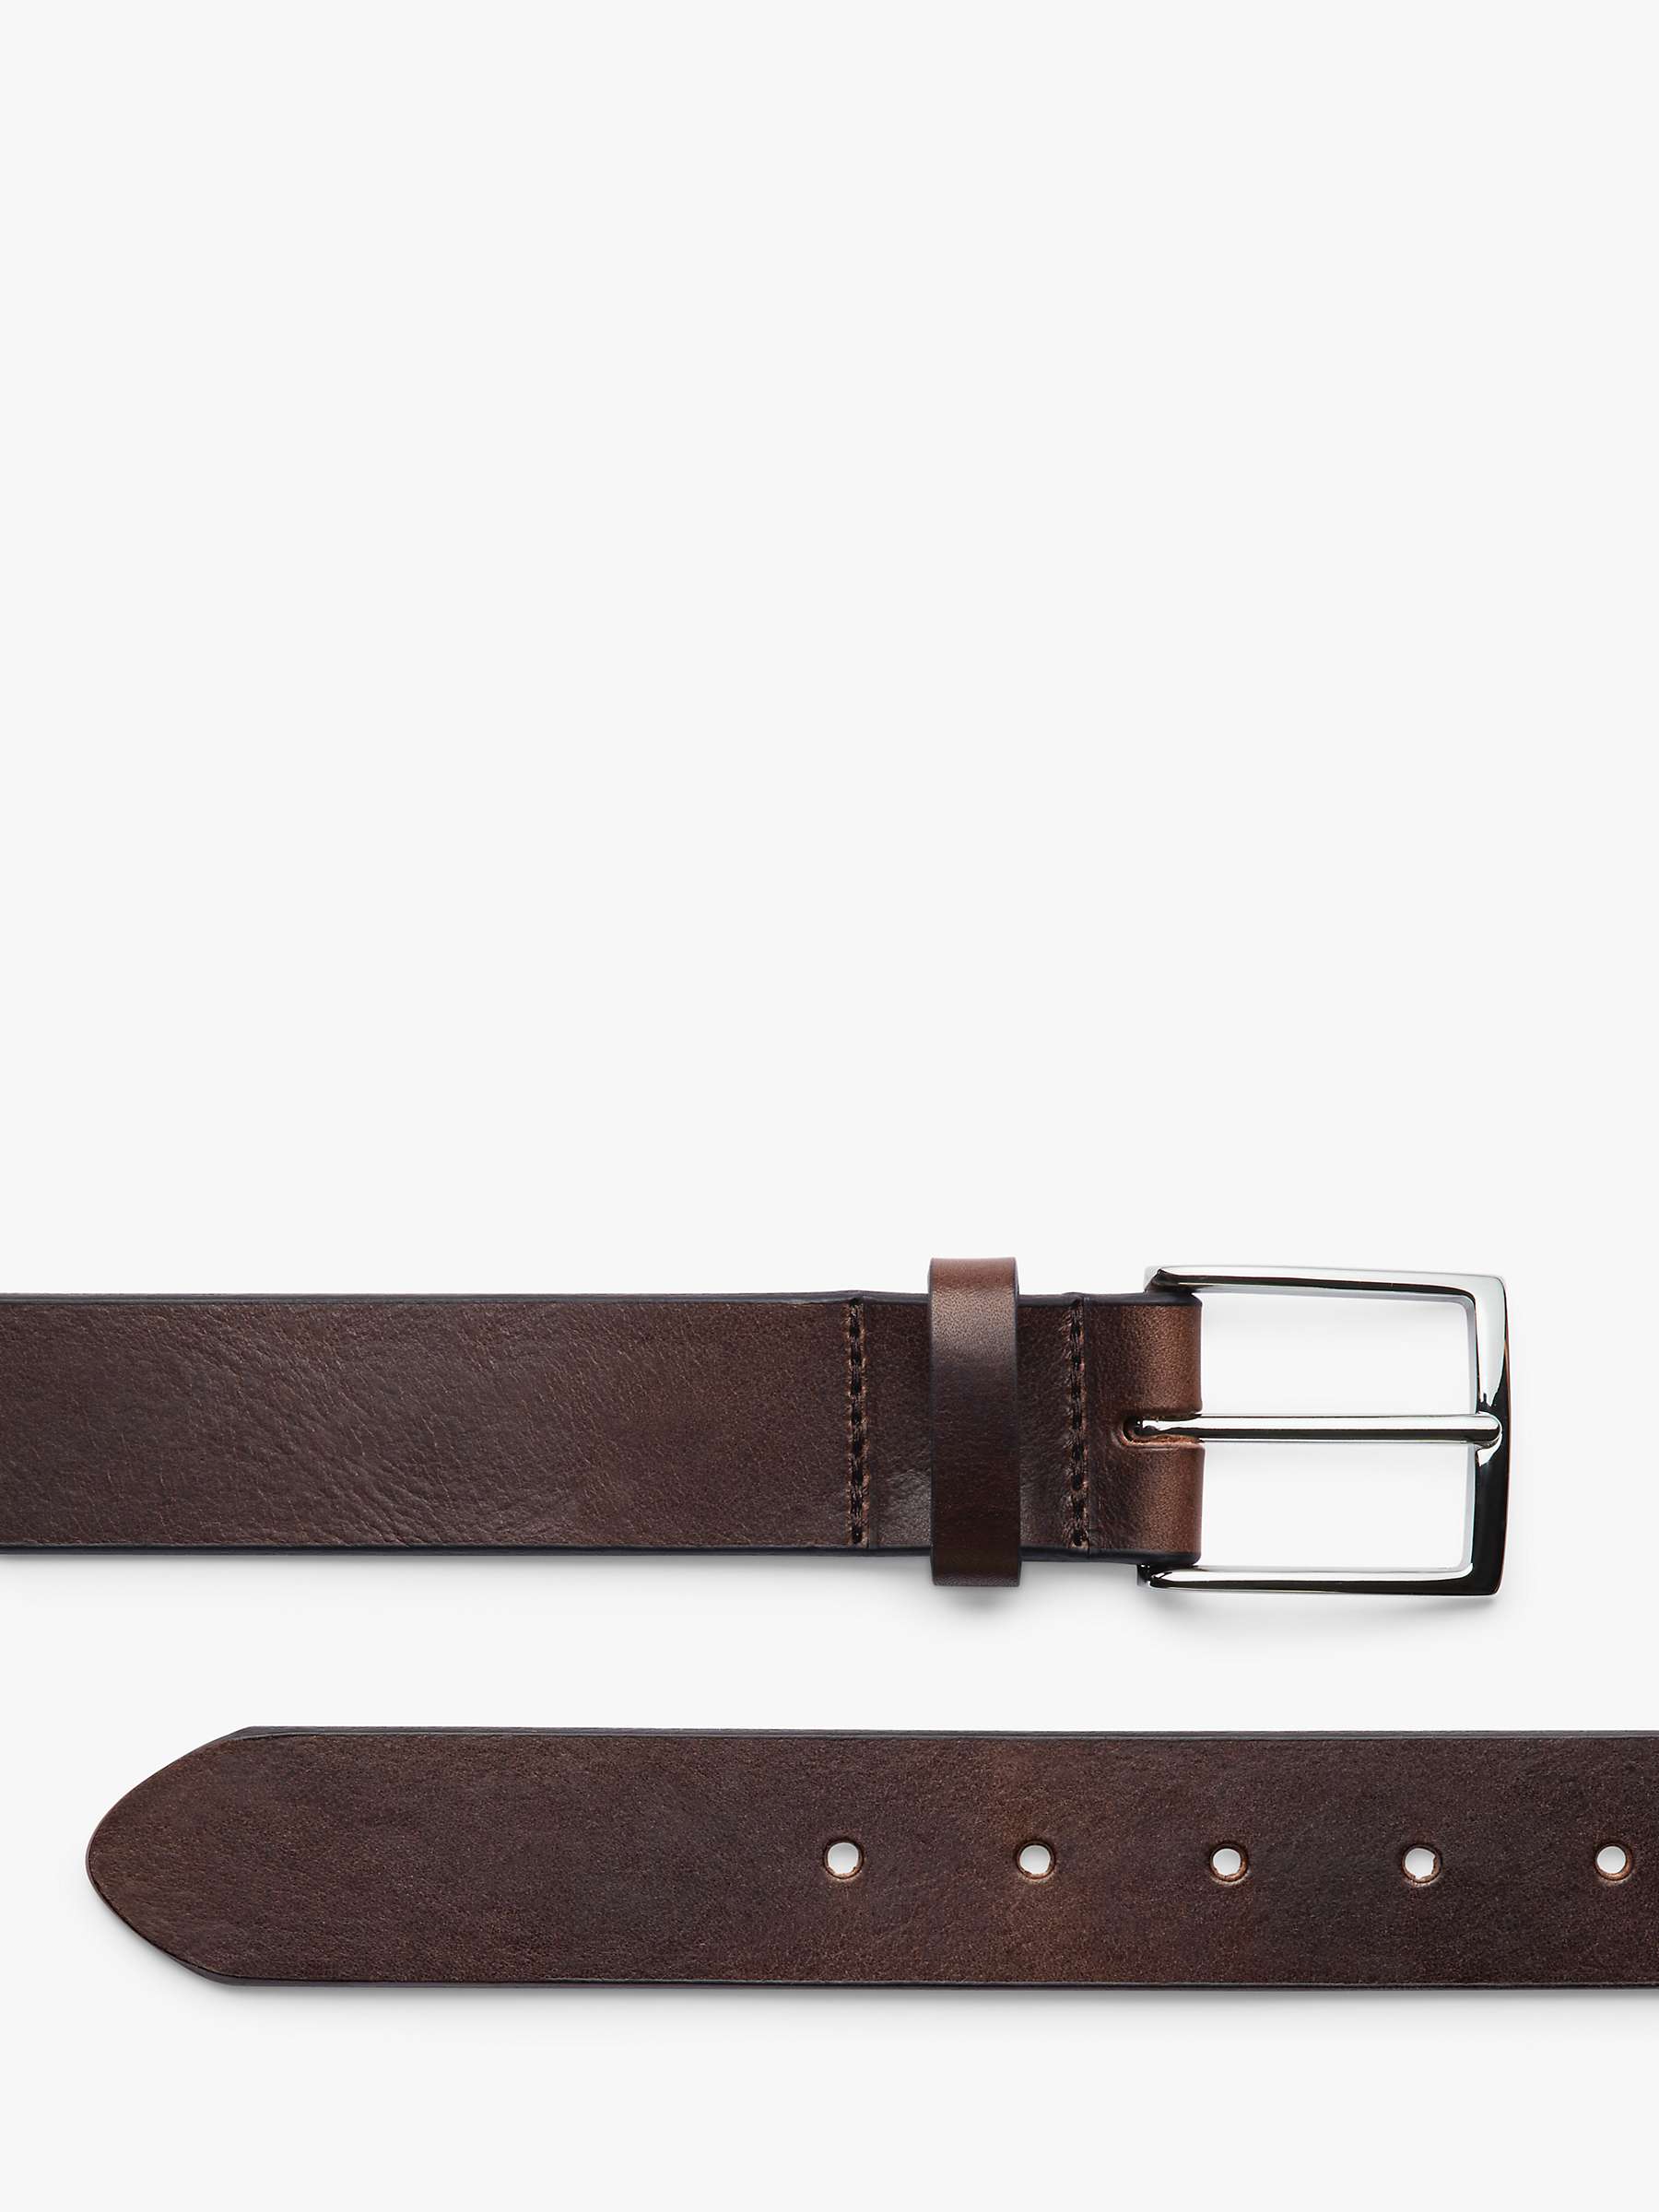 Buy Charles Tyrwhitt Leather Chino Belt Online at johnlewis.com